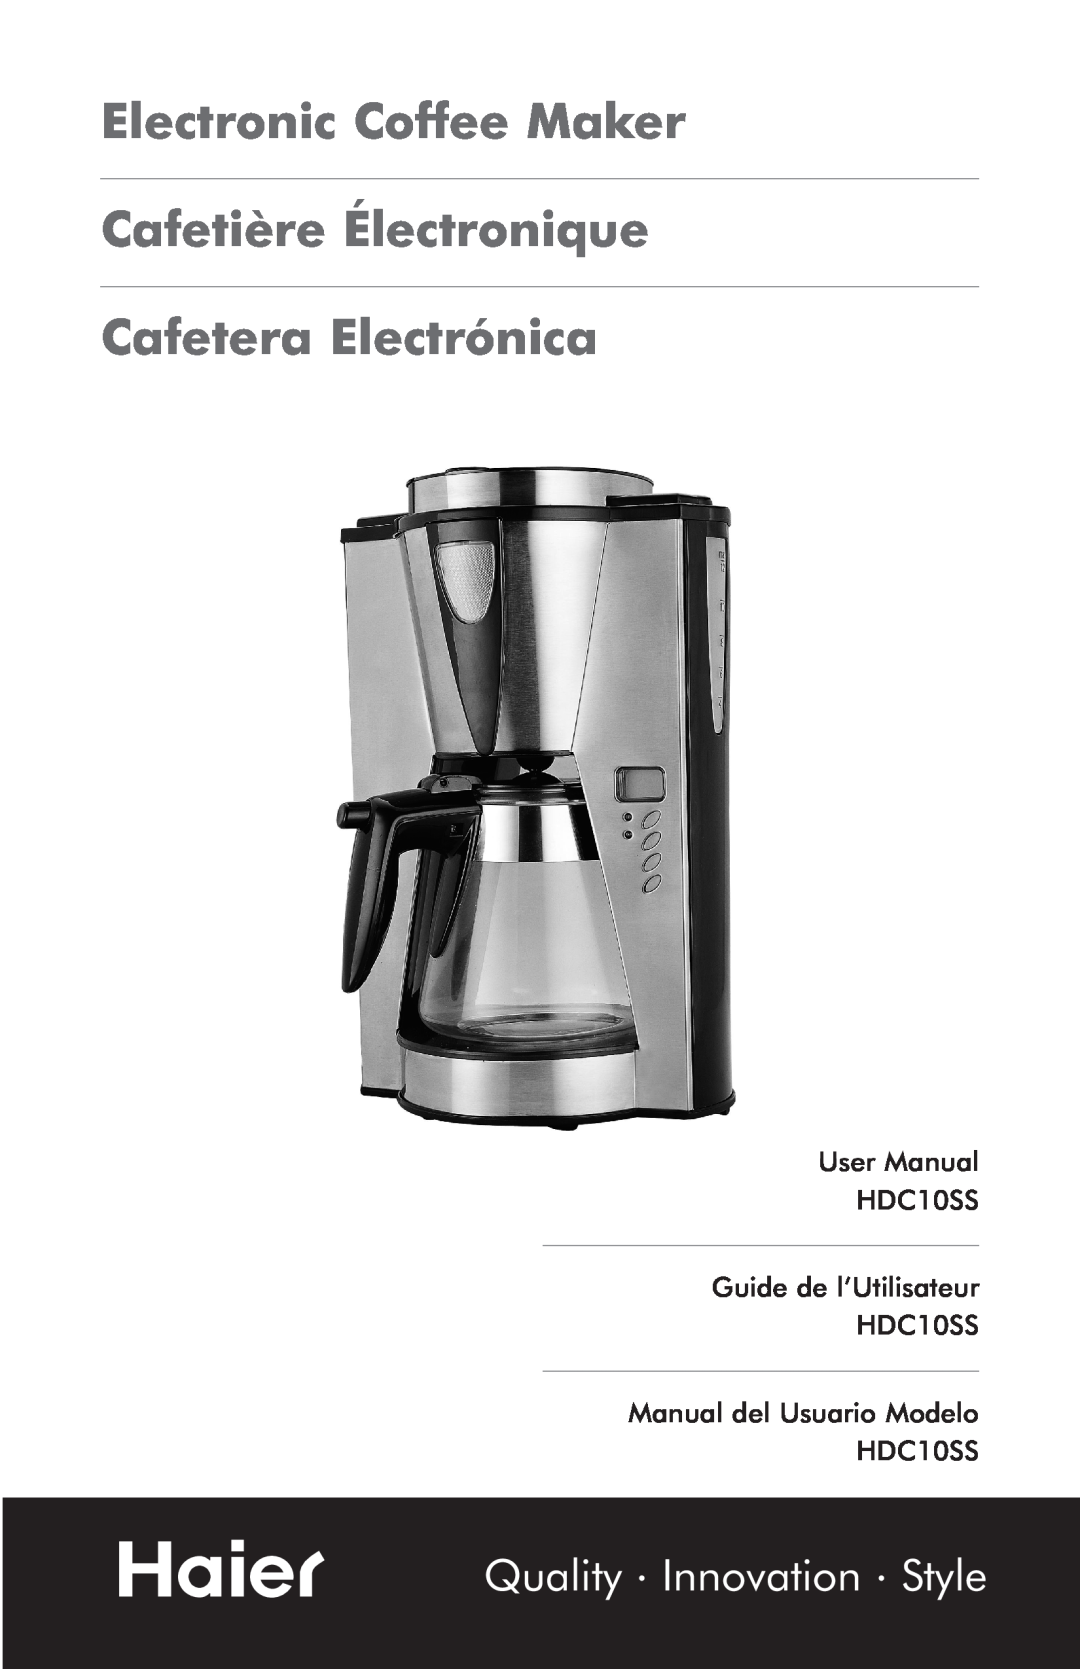 Haier HDC10SS user manual Electronic Coffee Maker Cafetière Électronique, Cafetera Electrónica 